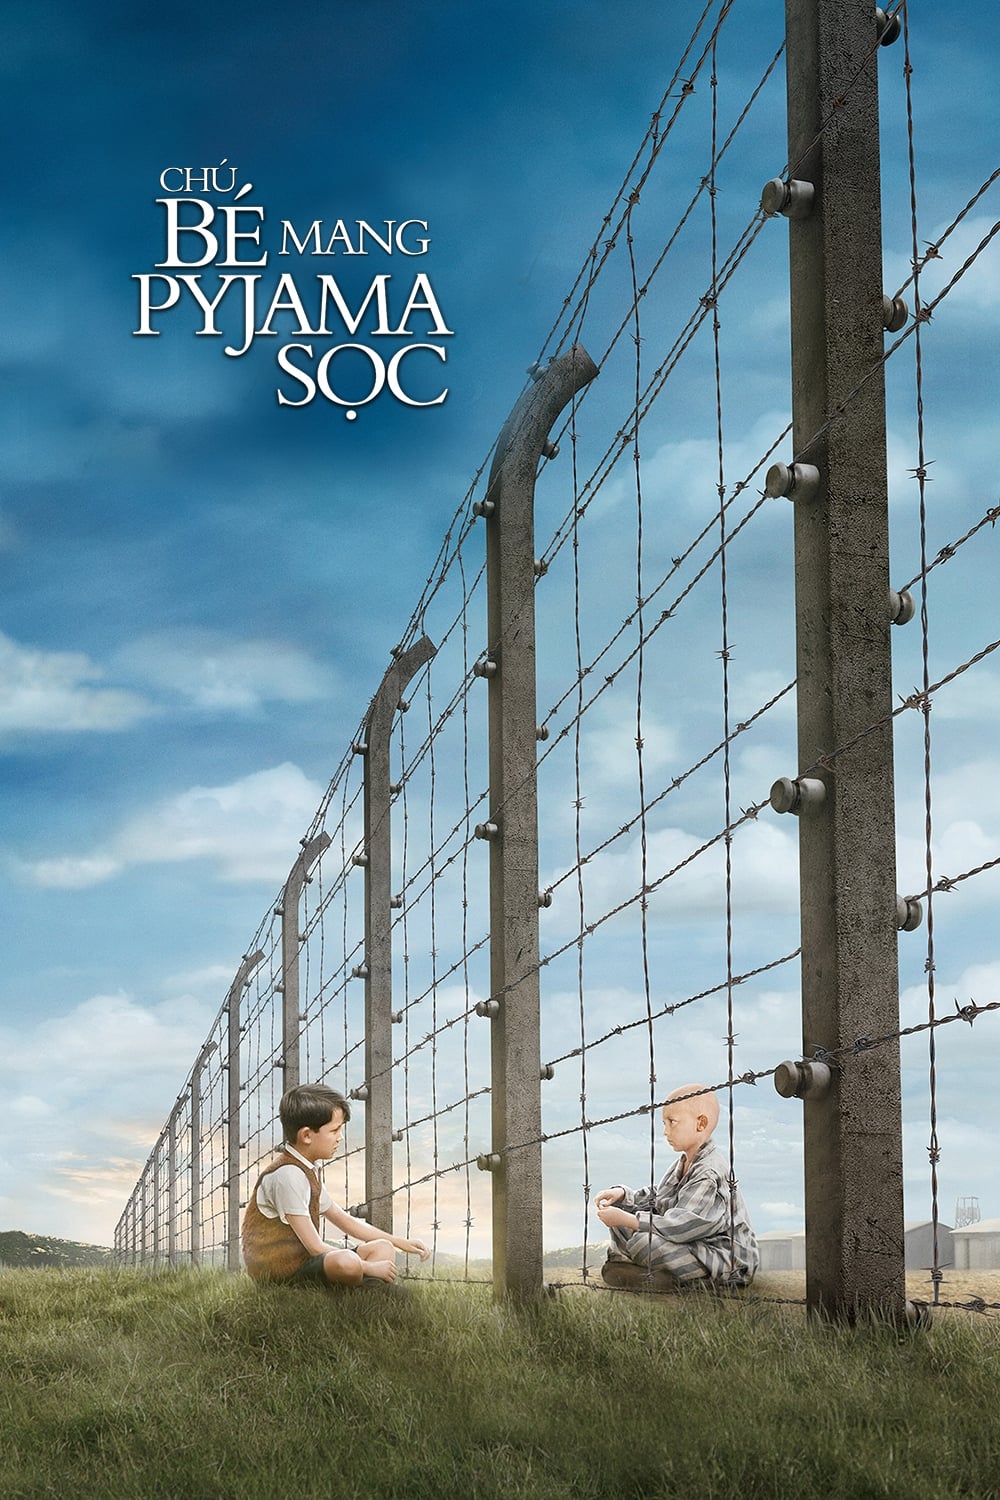 Chú Bé Mang Pyjama Sọc - The Boy in the Striped Pyjamas (2008)